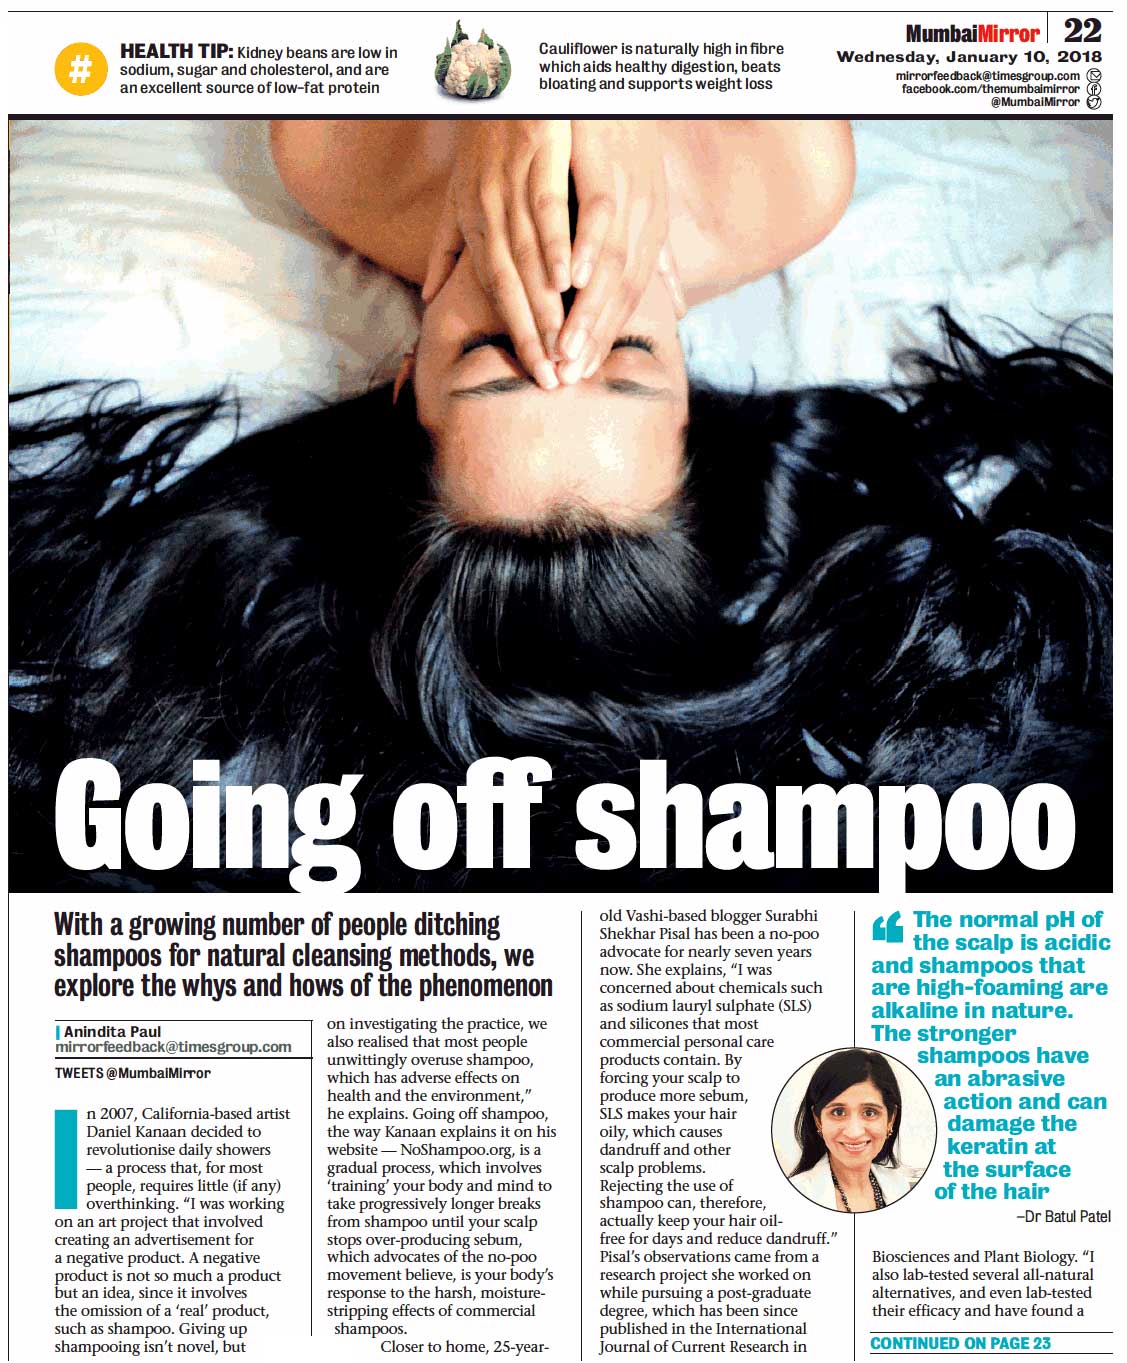 Article in Mumbai Mirror